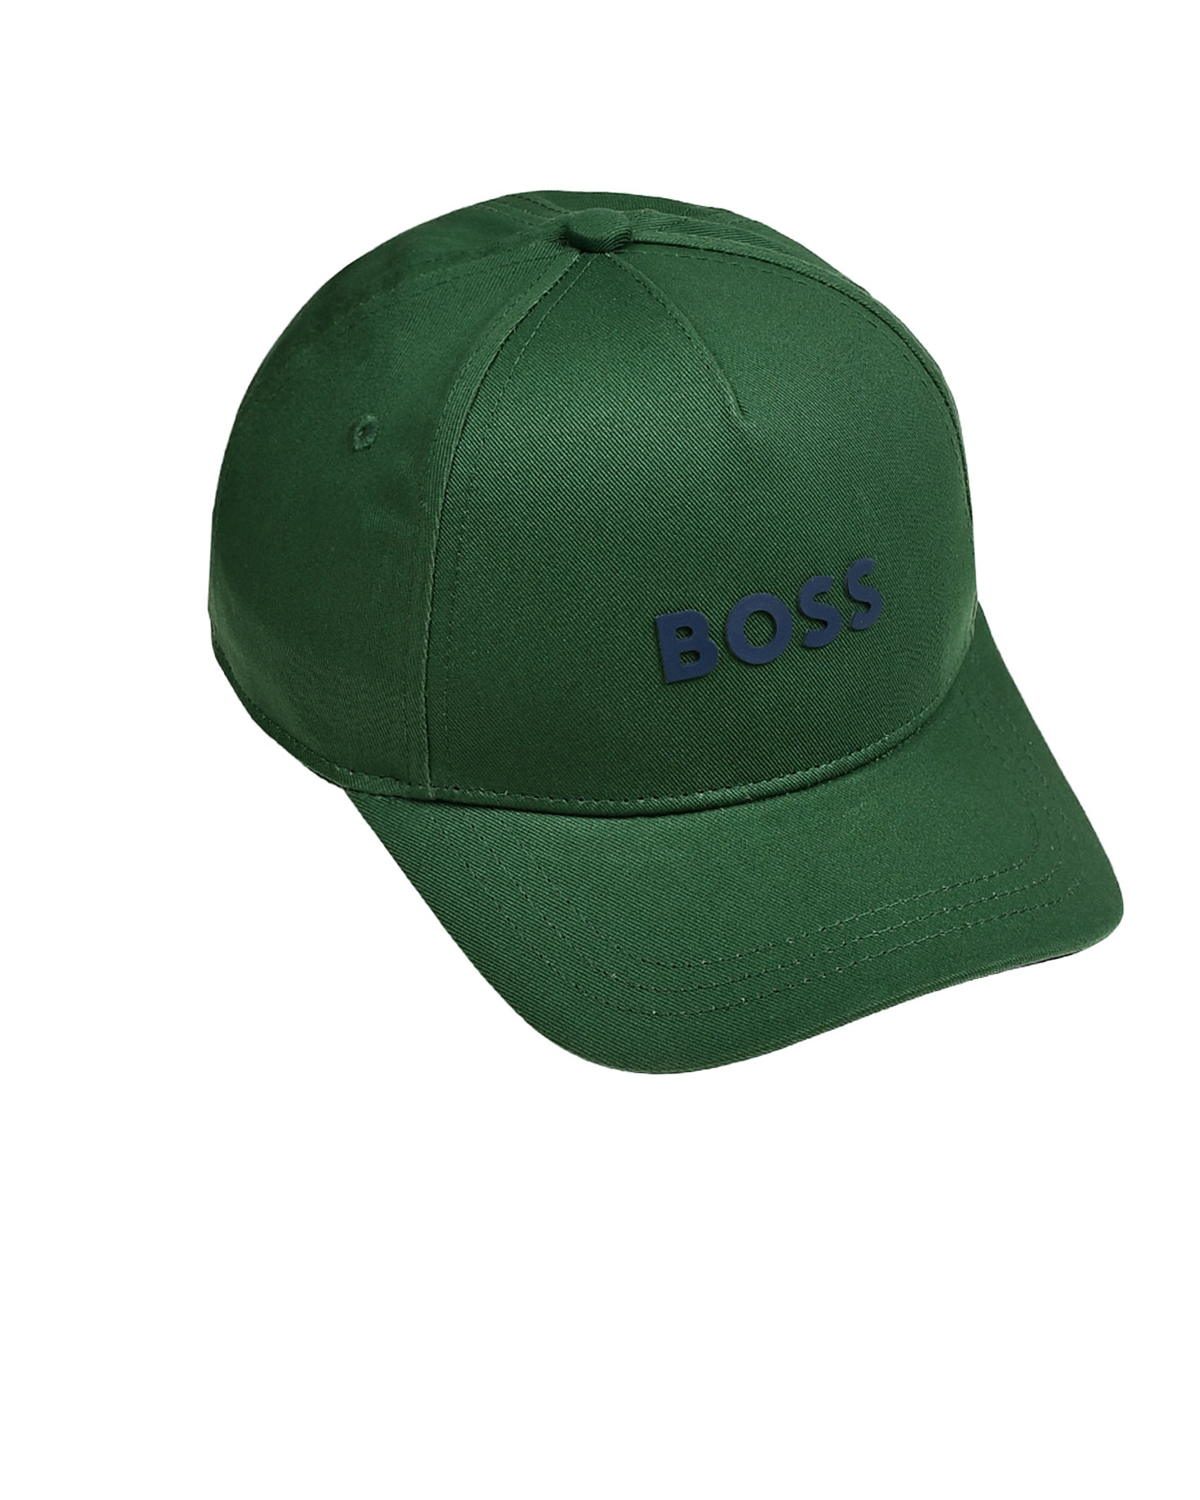 Бейсболка с синим логотипом, зеленая BOSS, размер 54, цвет нет цвета - фото 1